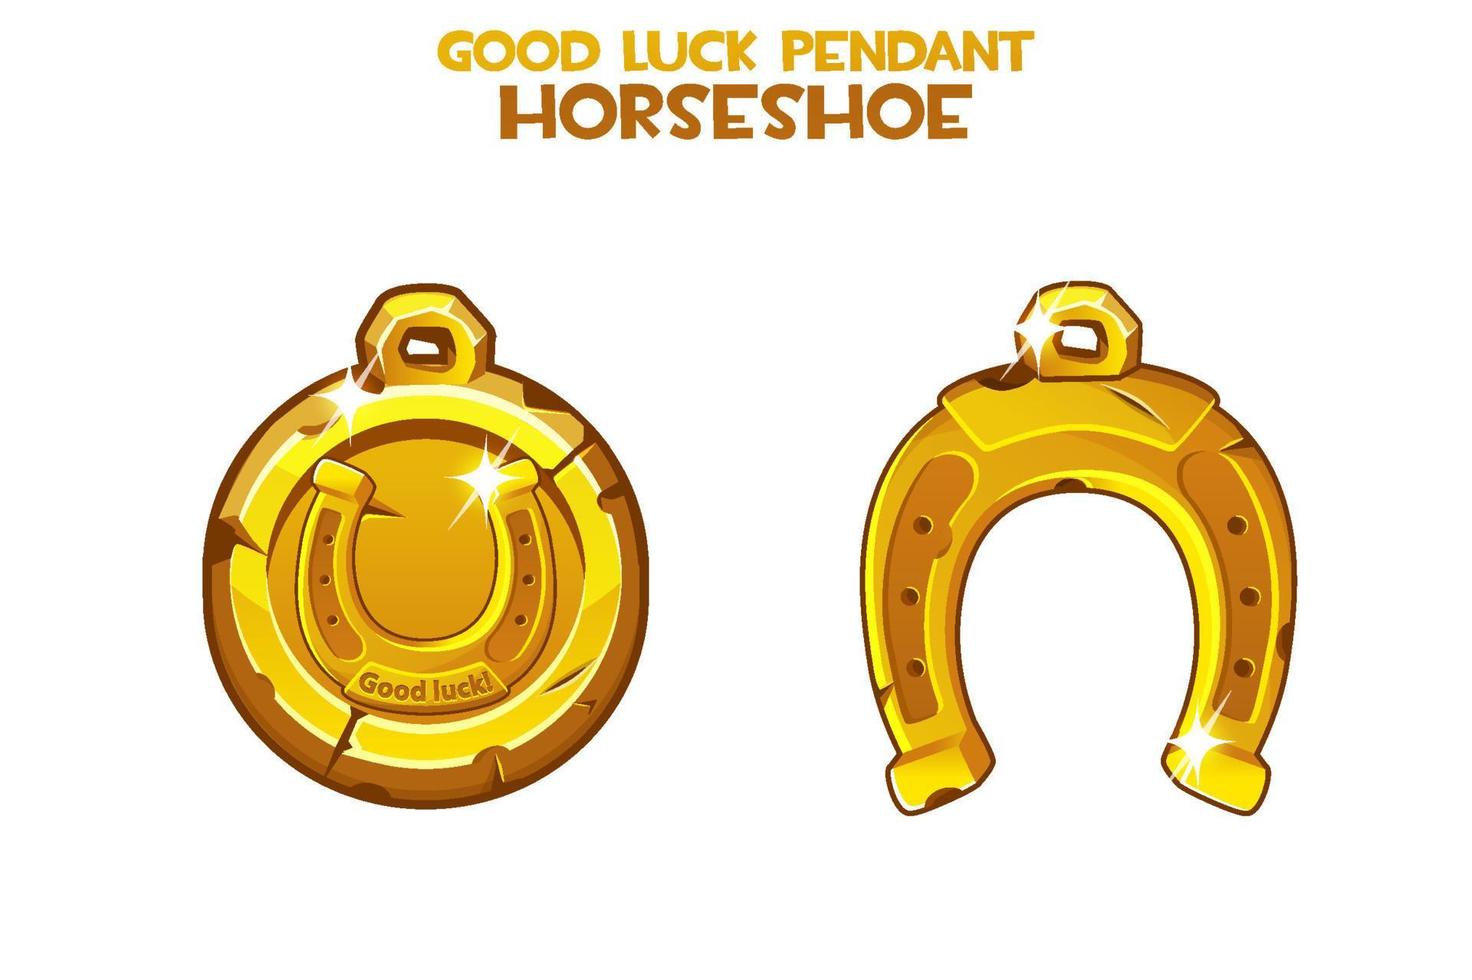 Horseshoe, good luck pendant vector